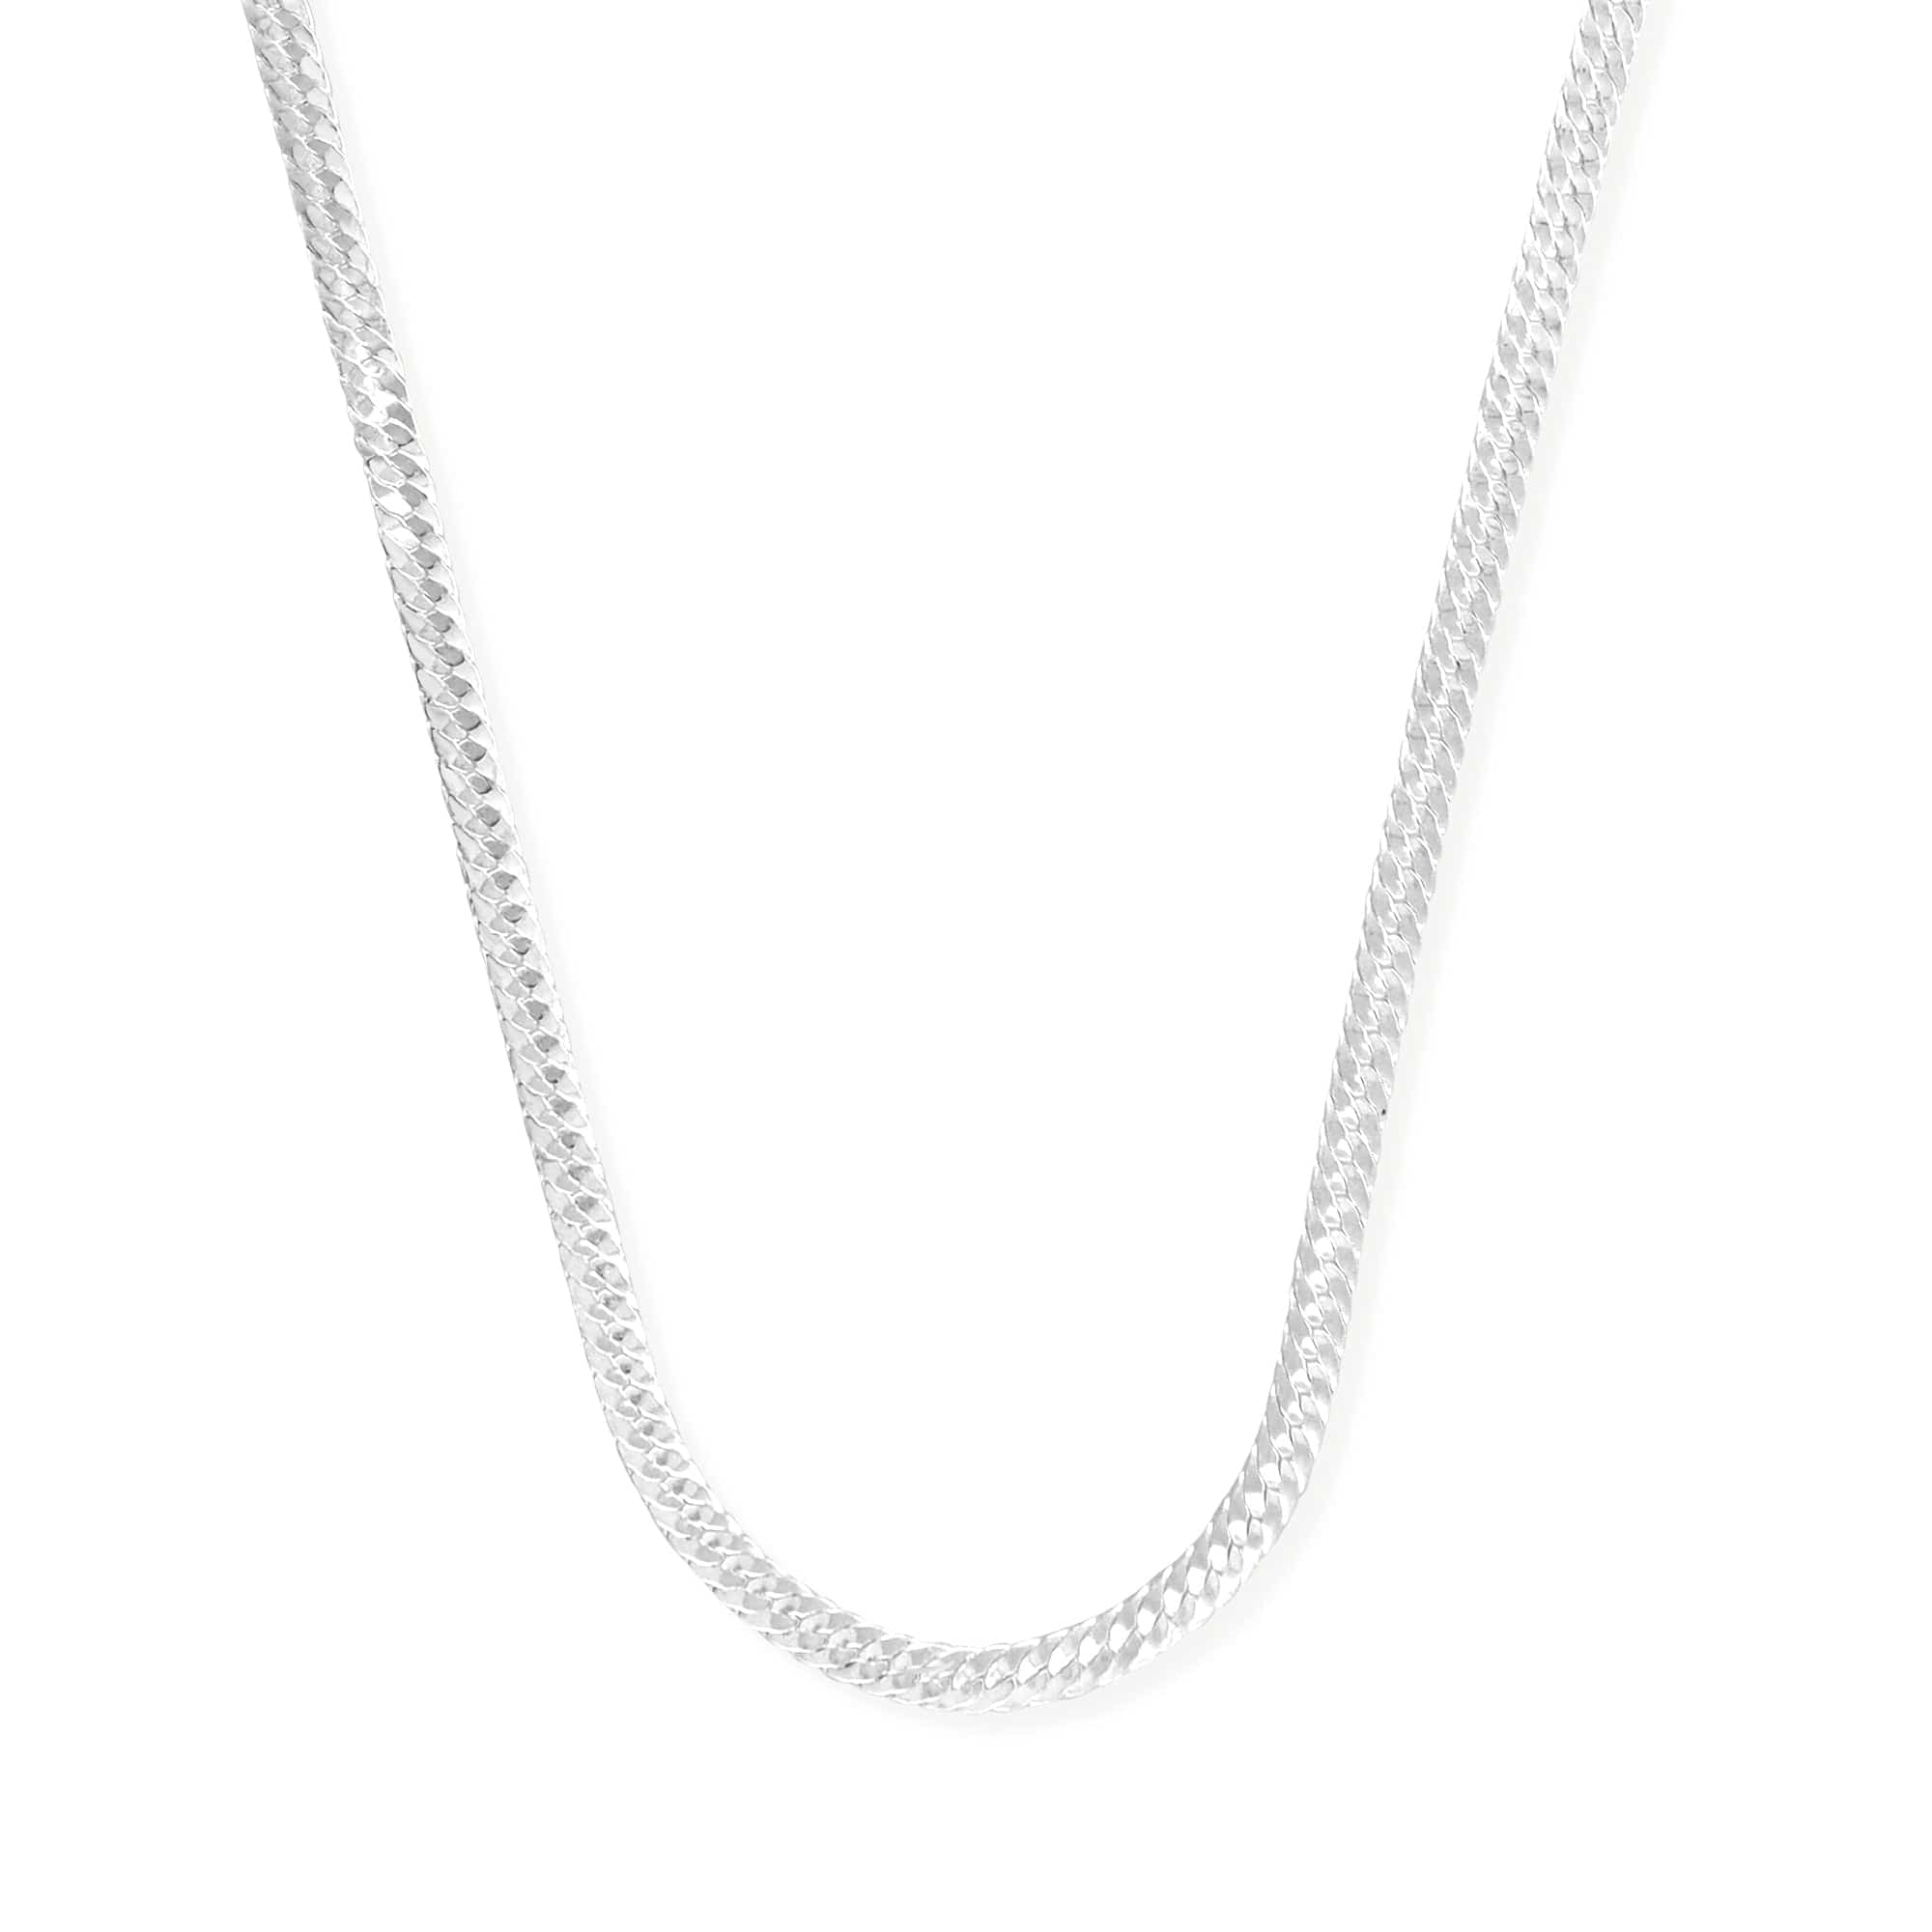 Boma Jewelry Necklaces Herringbone Chain Necklace